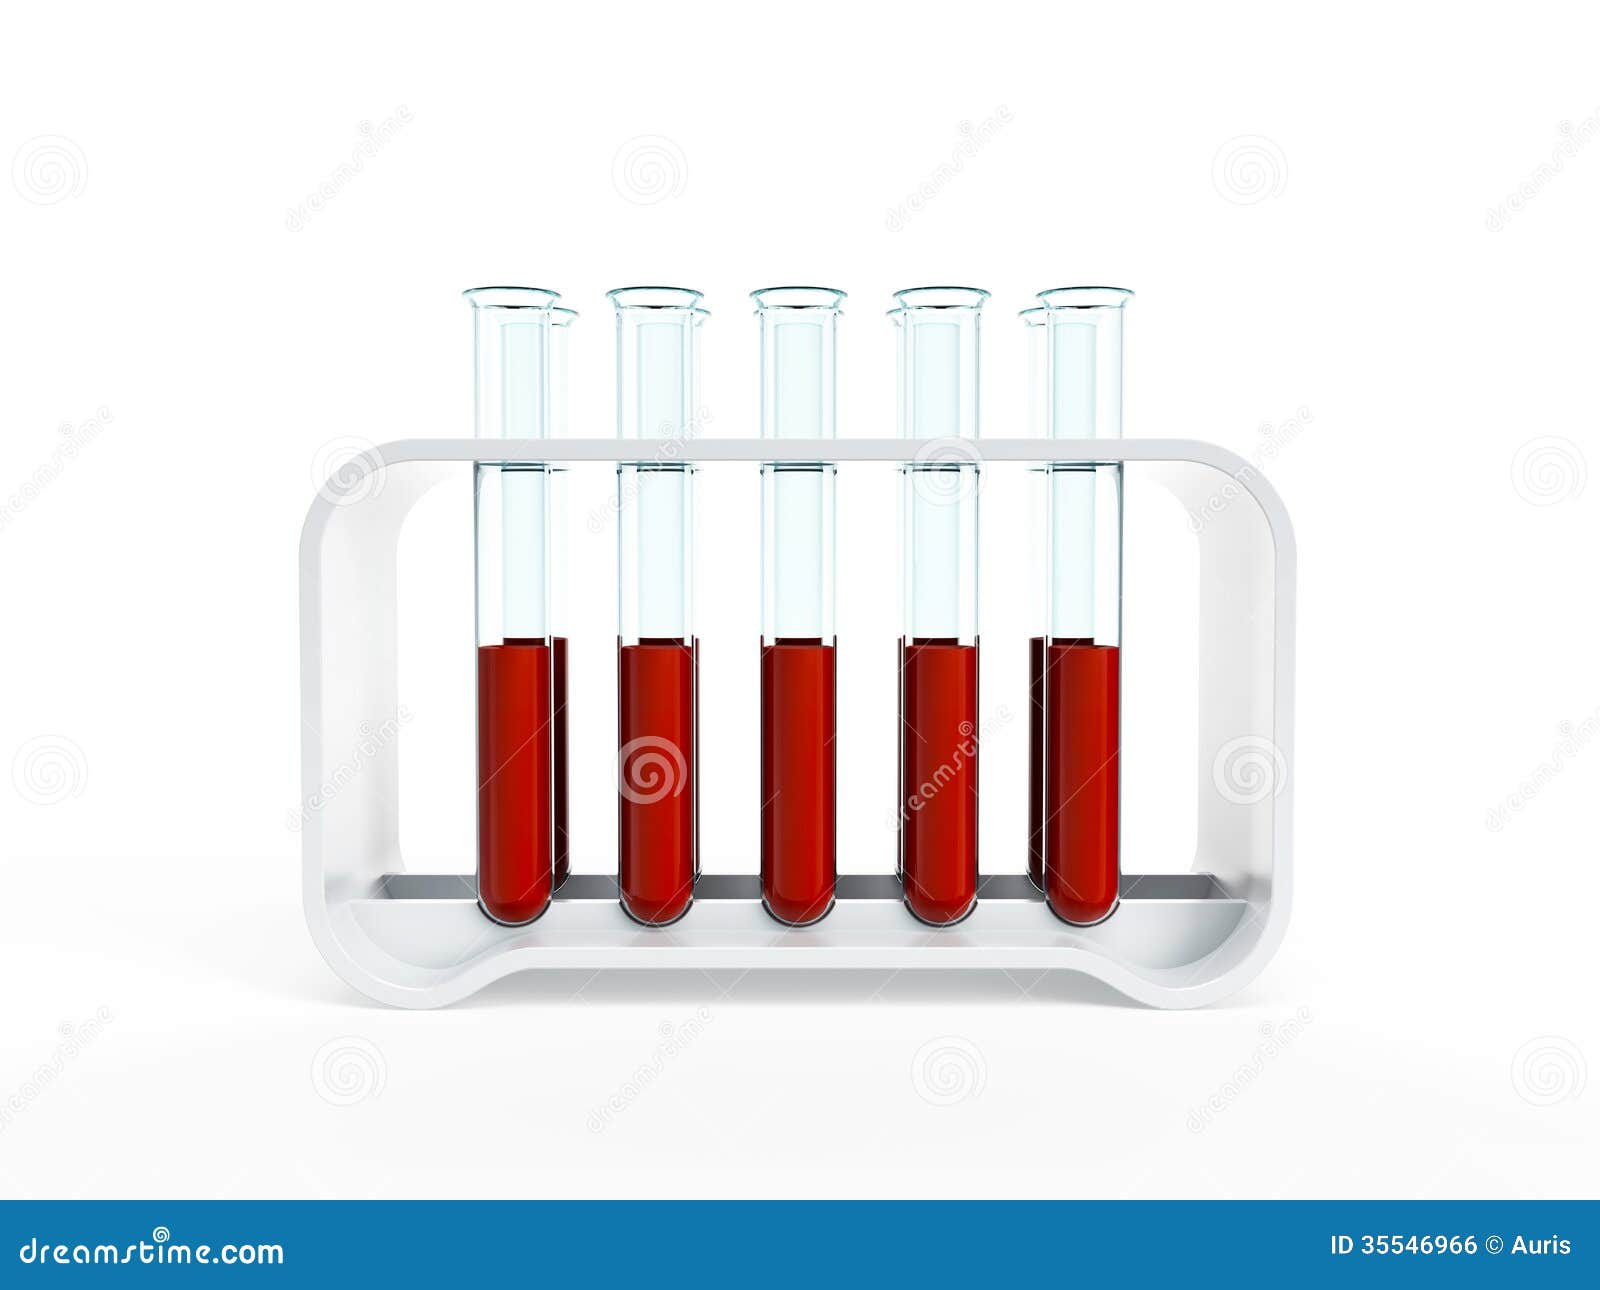 clipart blood tubes - photo #30